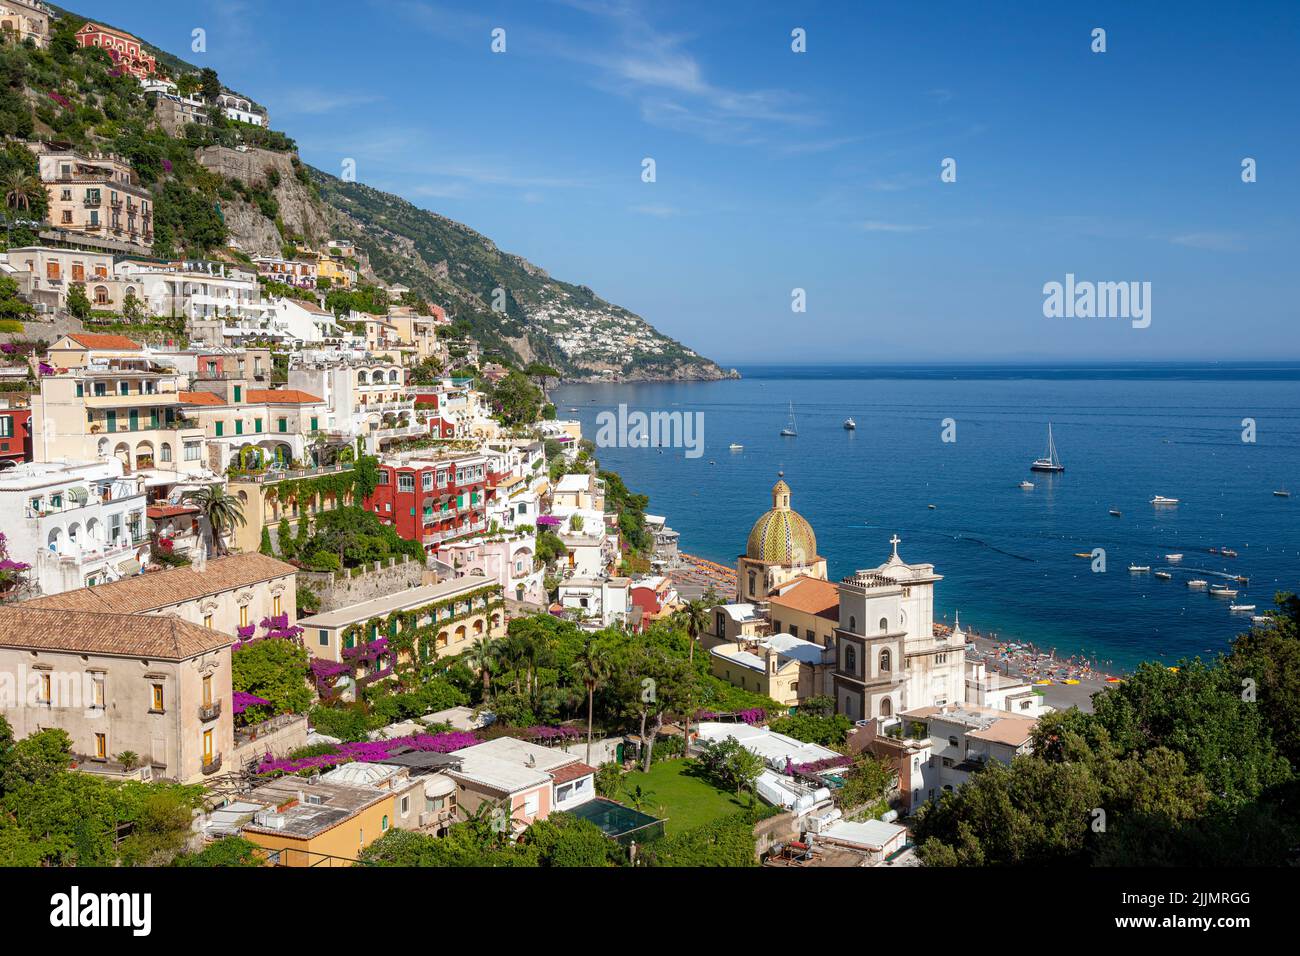 View along the Amalfi coast of the hillside town of Positano, Campania Italy Stock Photo